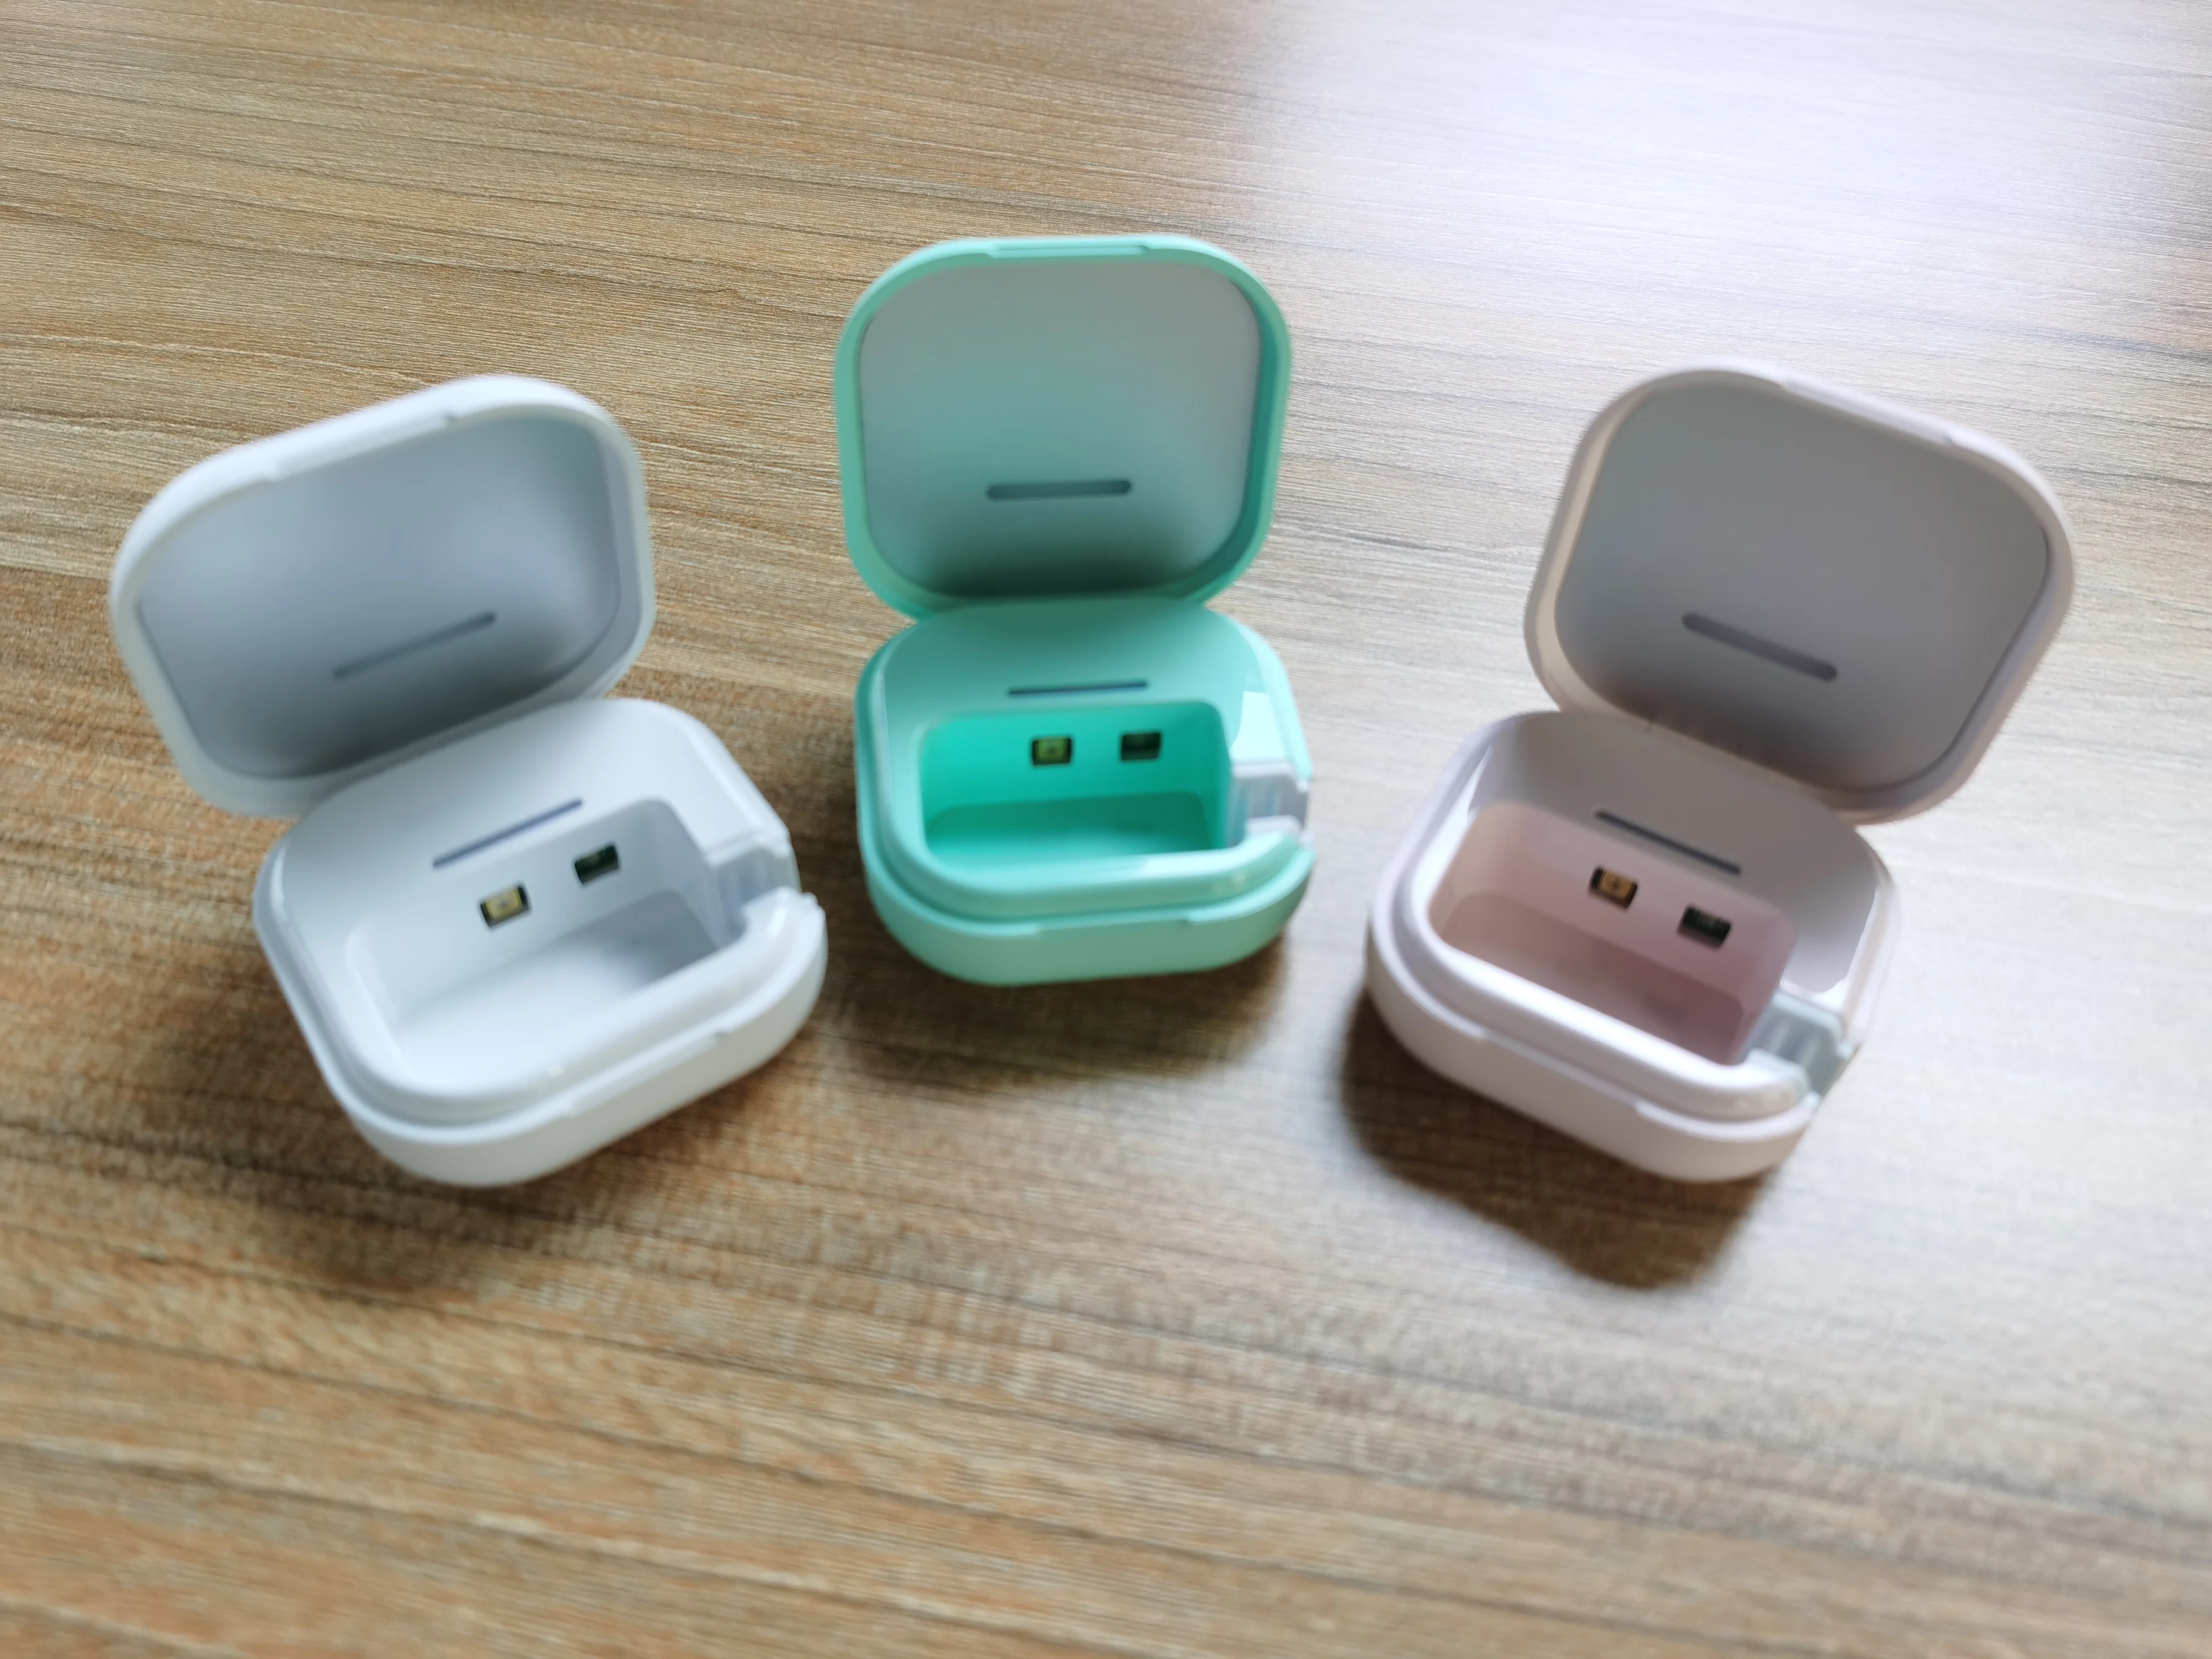 New design portable multi scenes suitable USB charging UVC toothbrush sterlizer dental sterilizer